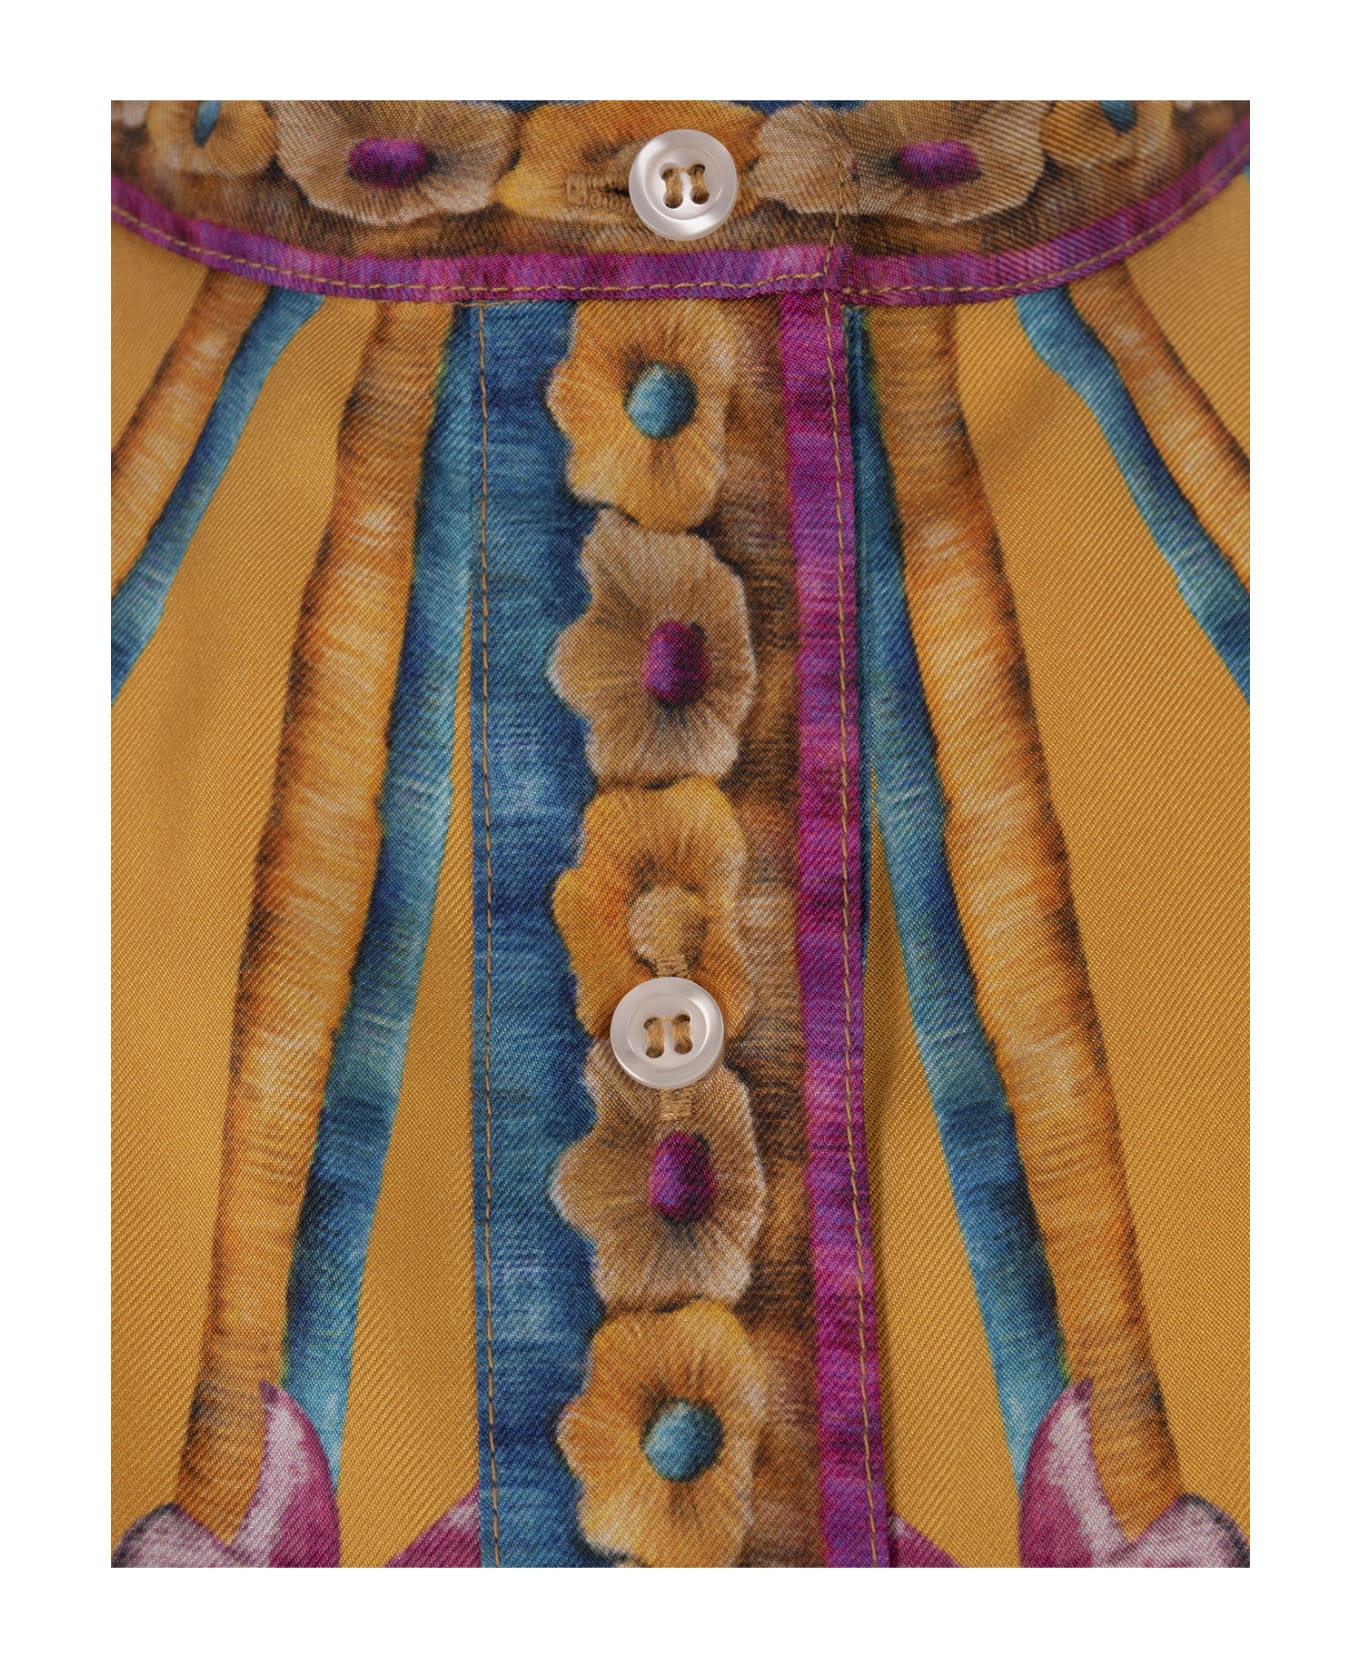 La DoubleJ Zodiac Placée Marigold Foulard Shirt In Silk Twill - Multicolour